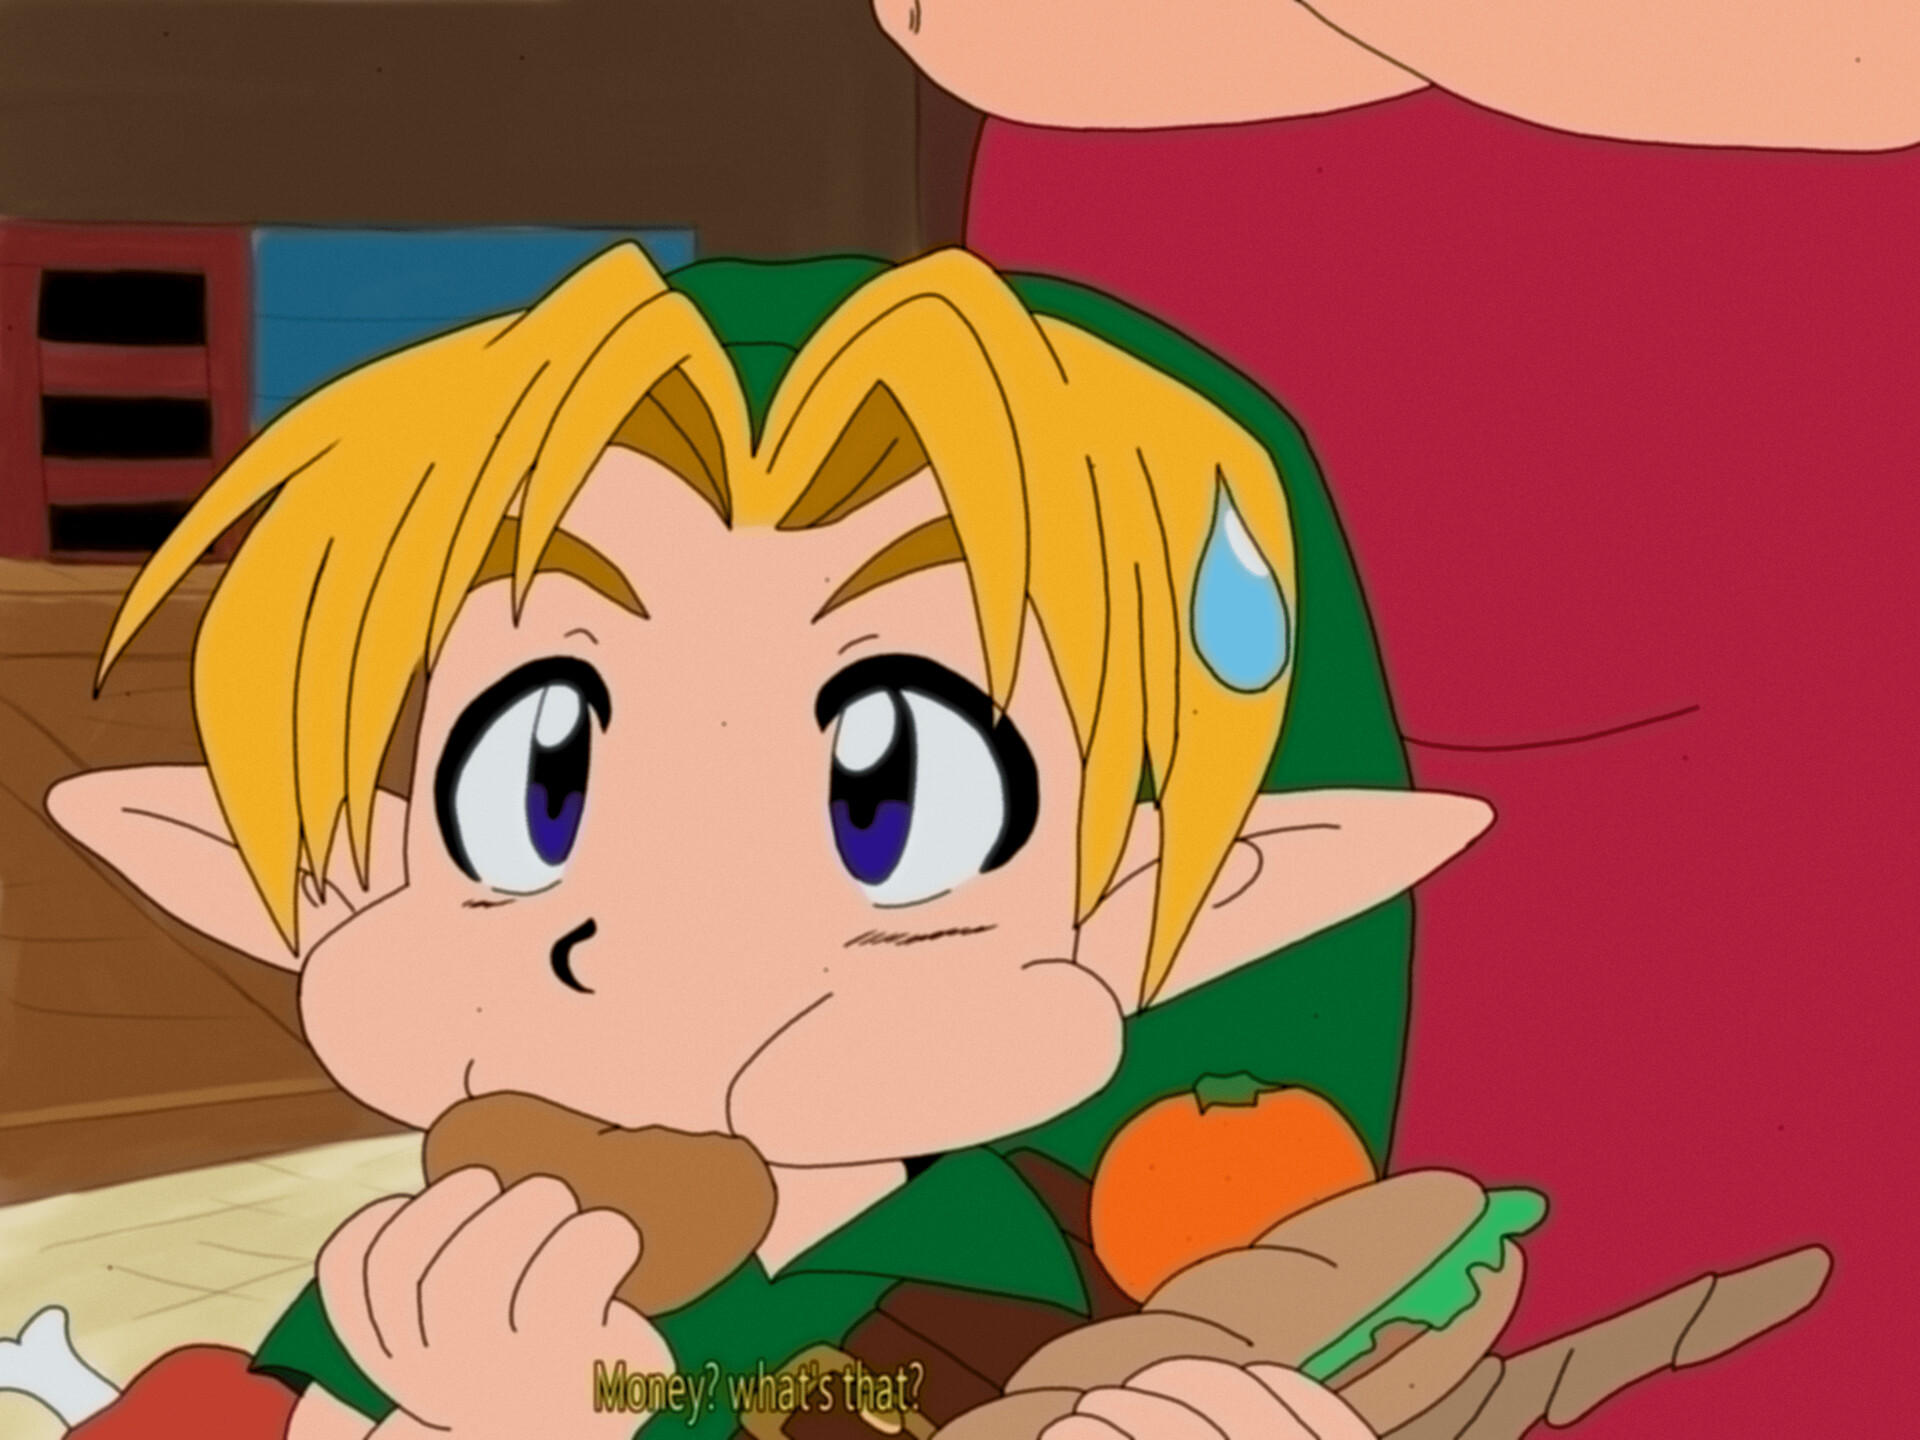 ArtStation - Young Princess Zelda: Fanart from Ocarina of Time